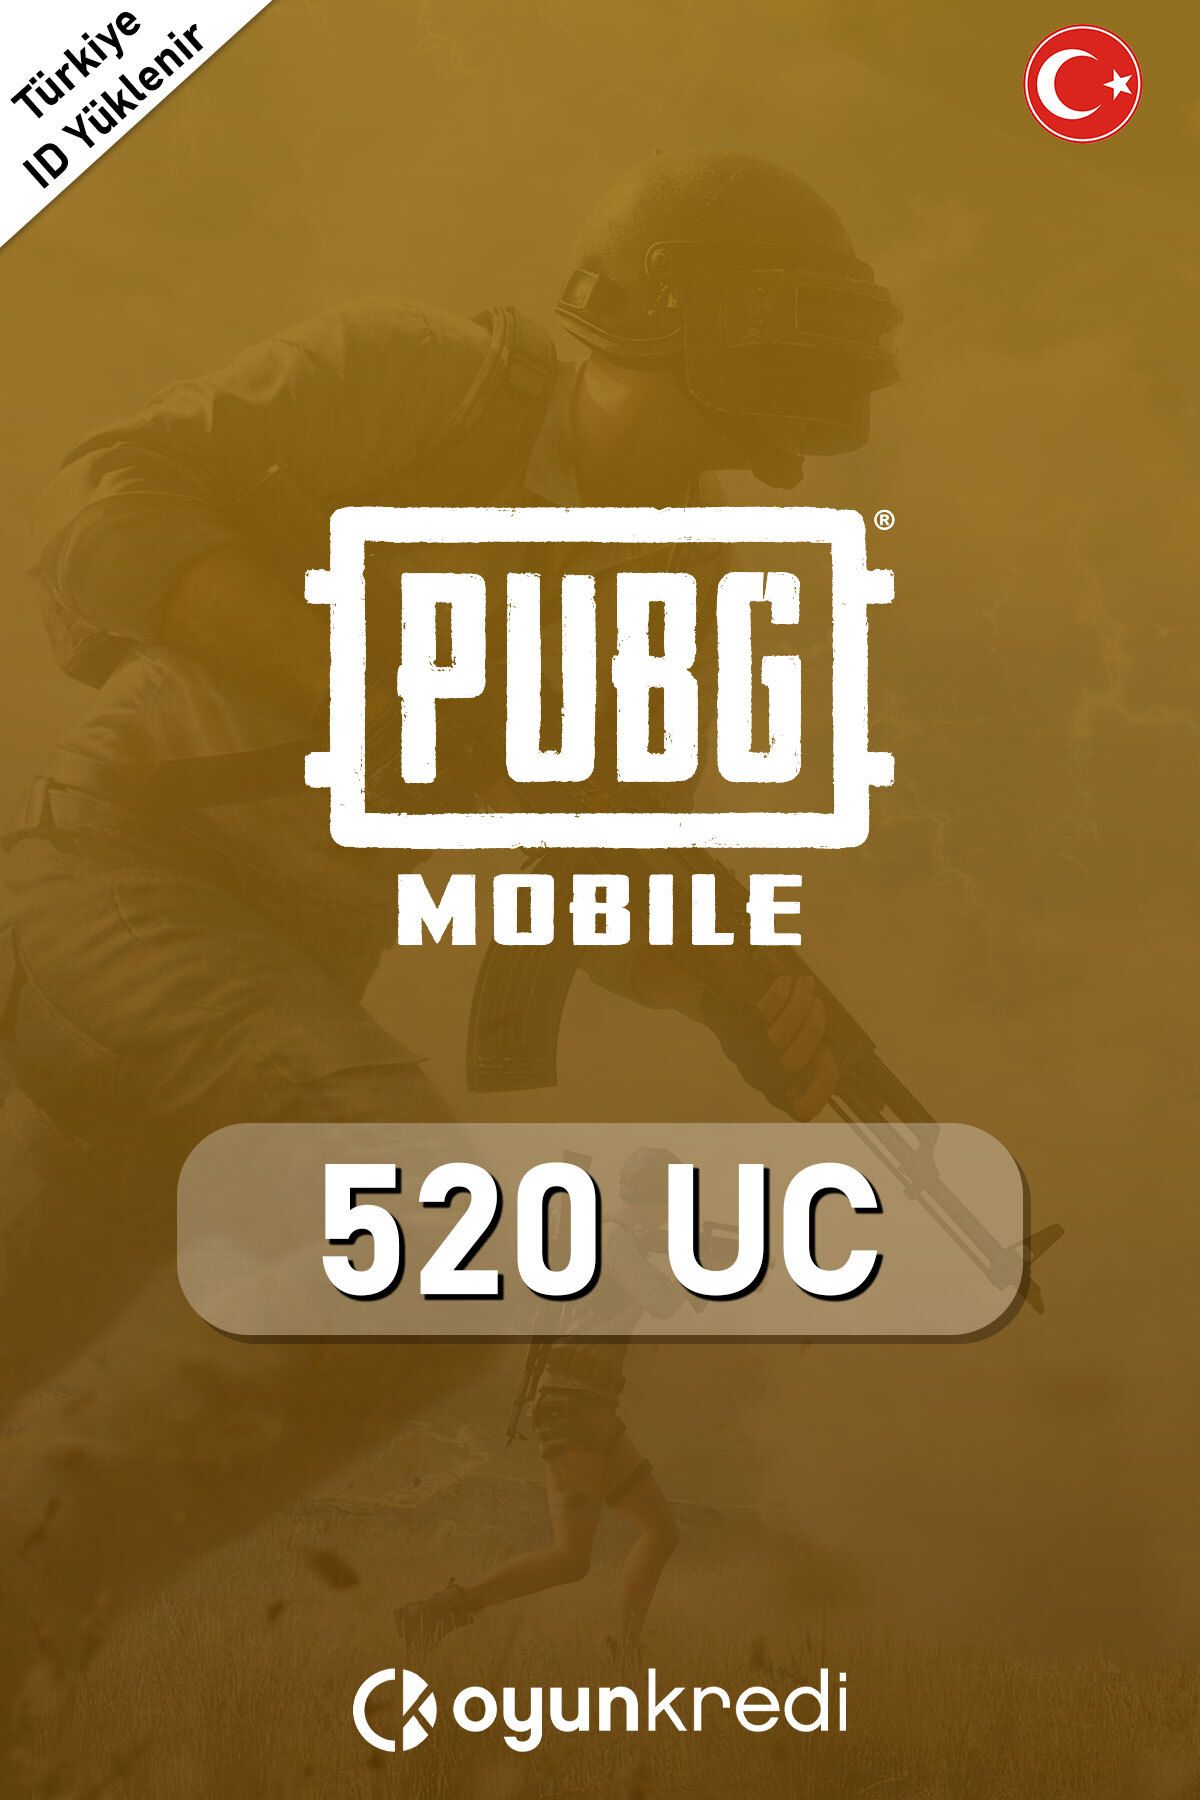 Pubg Mobile 520 Uc